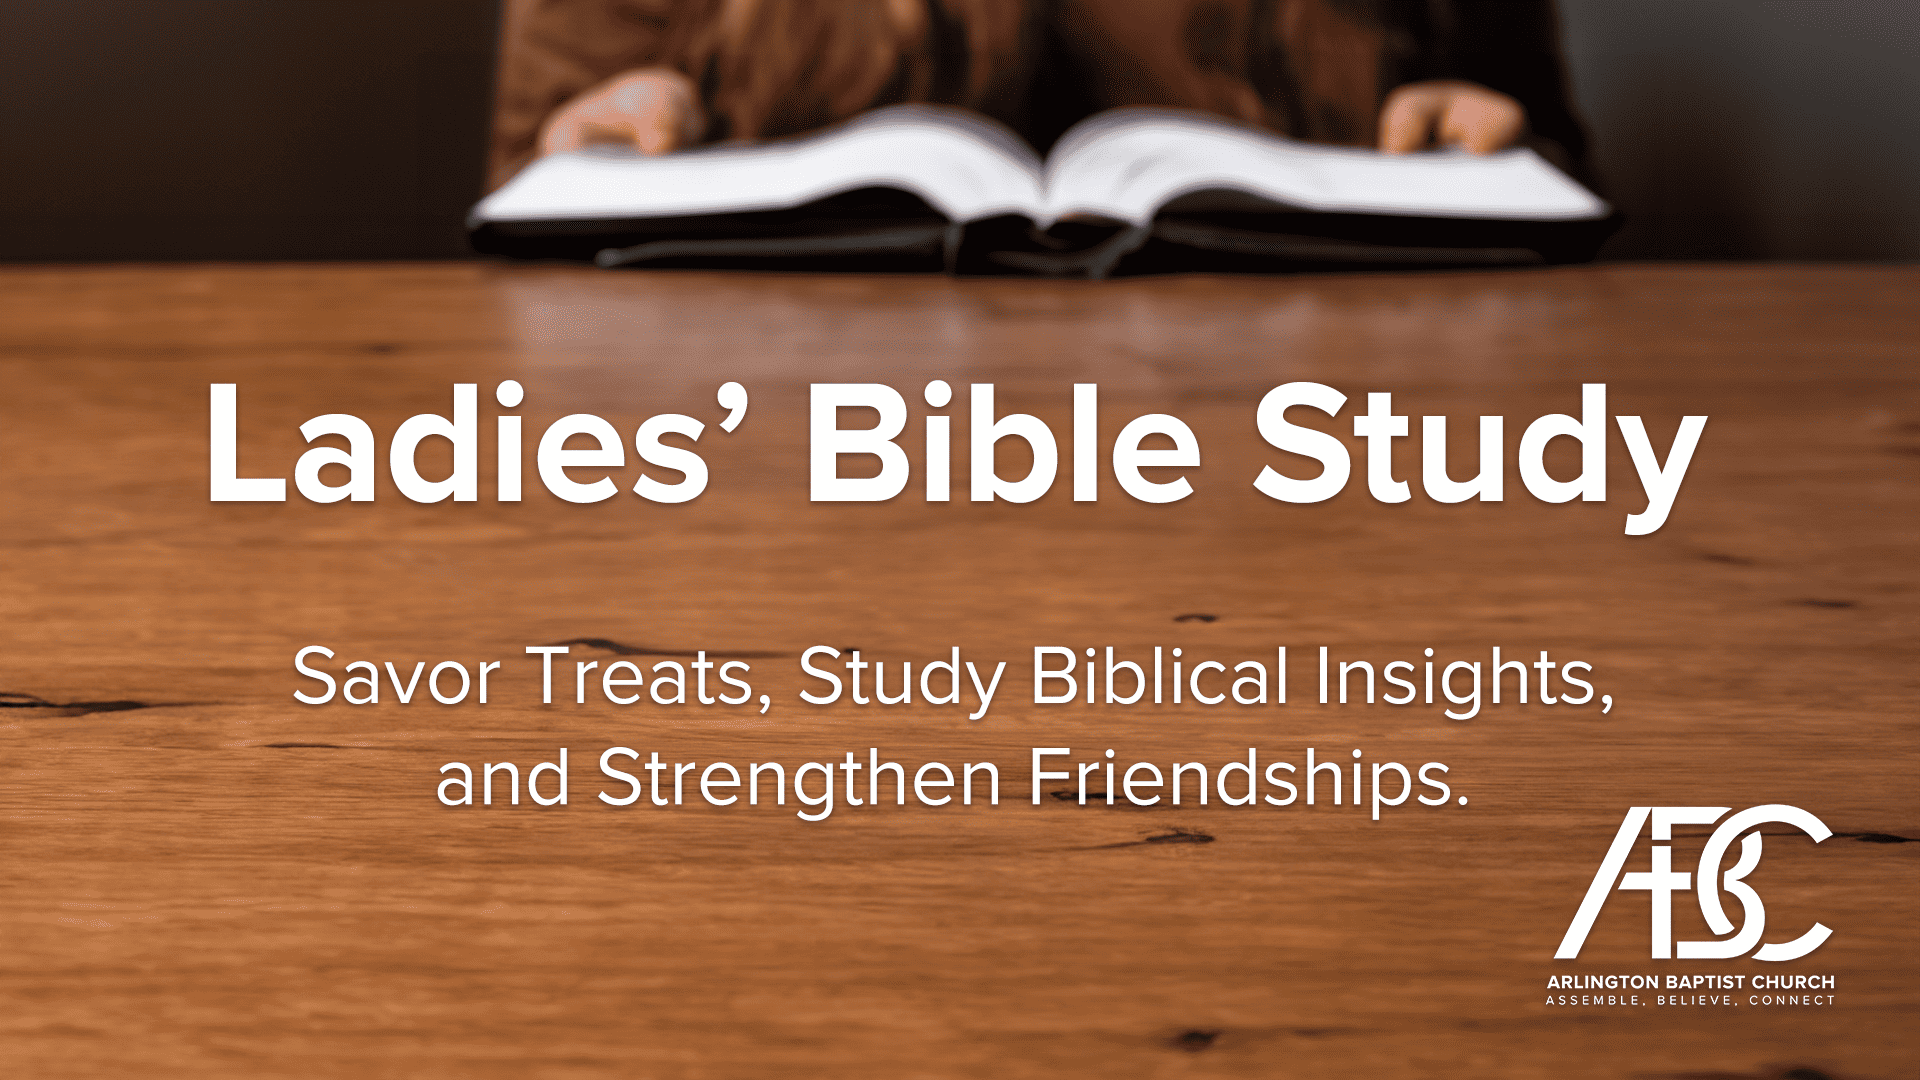 Ladies Bible Study at Arlington Baptist Church